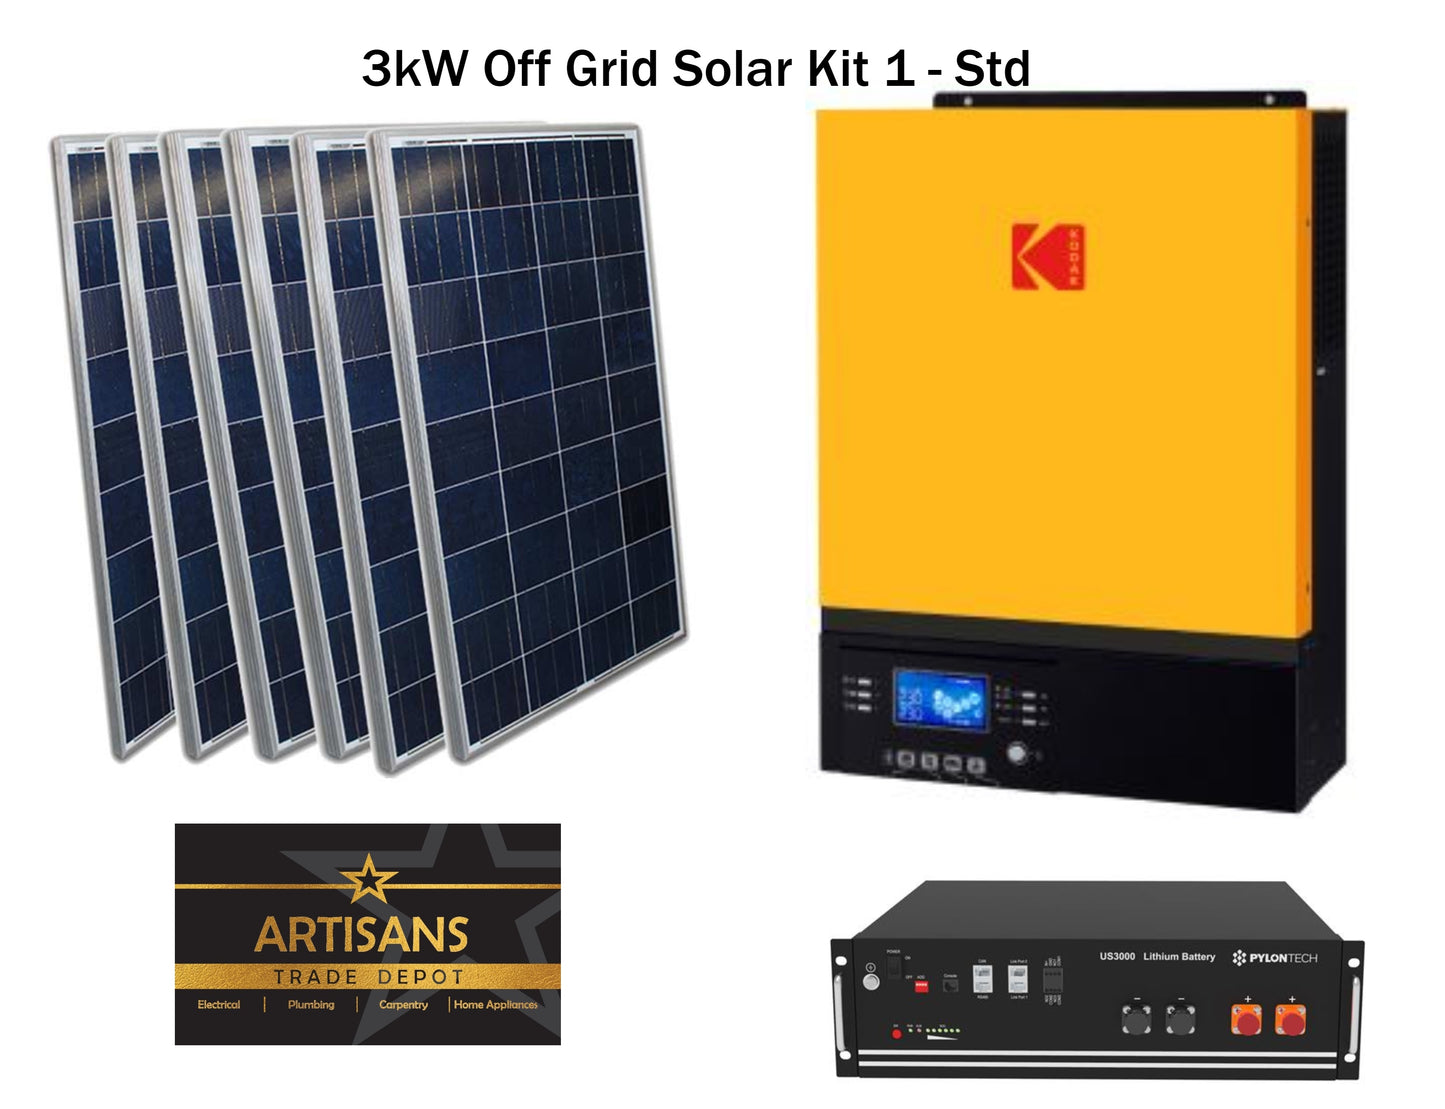 3kW Off Grid Solar Kit 1 - STD - (PV Panels, Inverter & Lithium Ion Battery) - Artisans Trade Depot